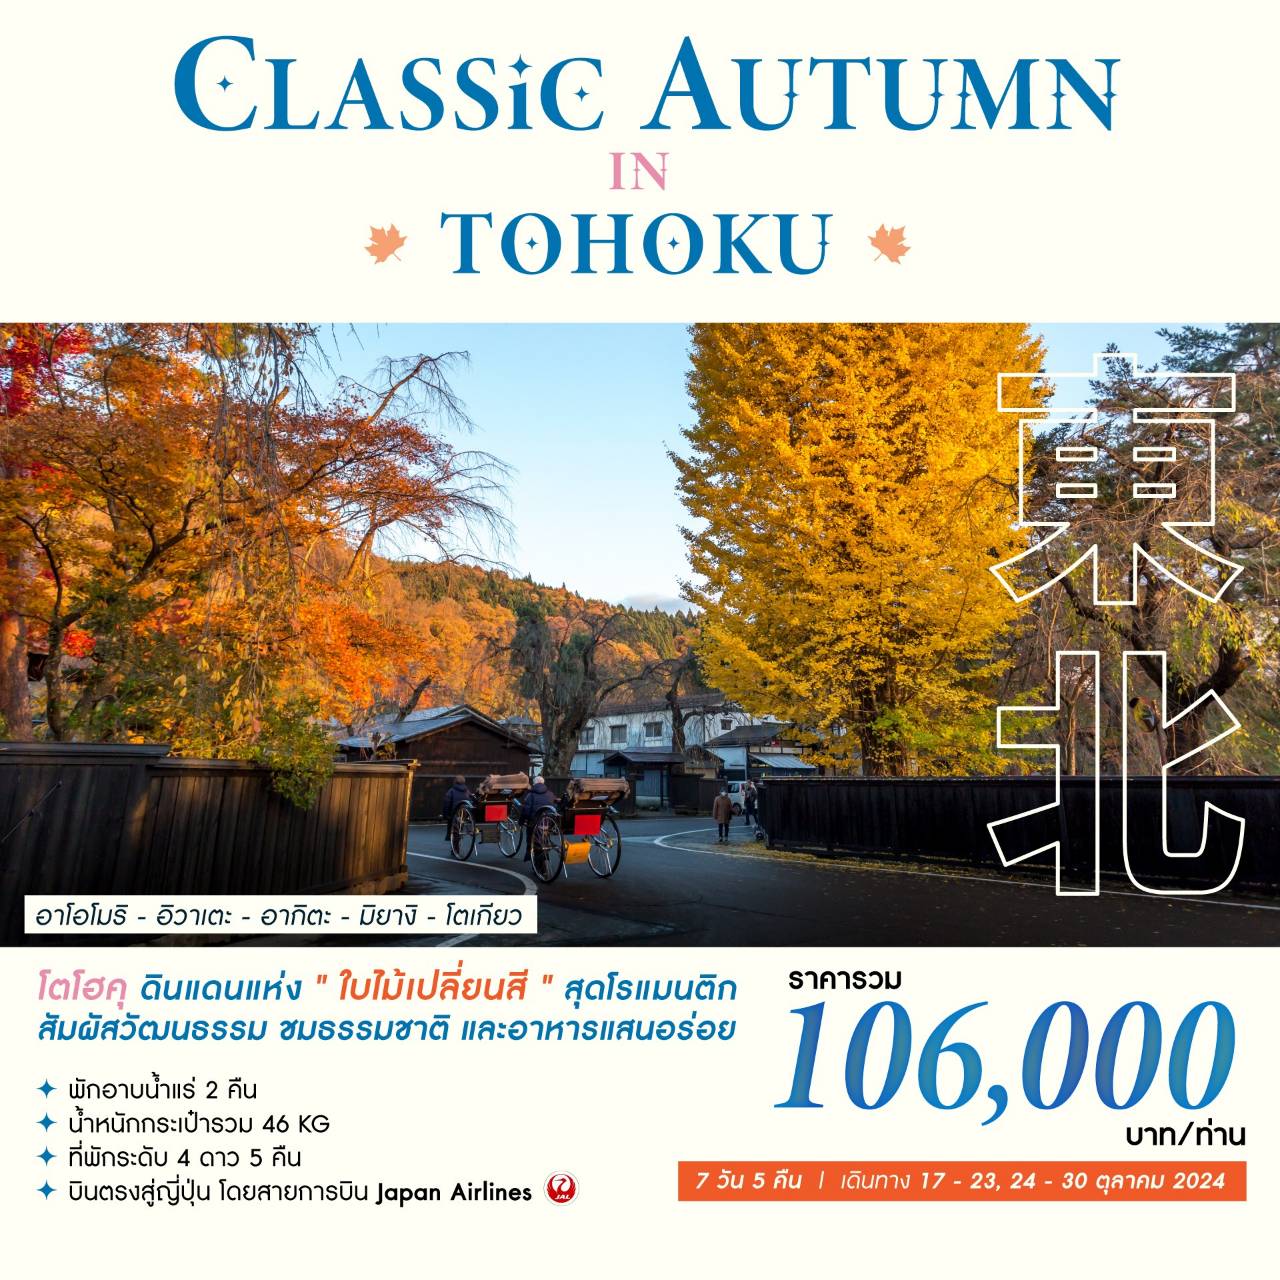 CLASSIC AUTUMN IN TOHOKU